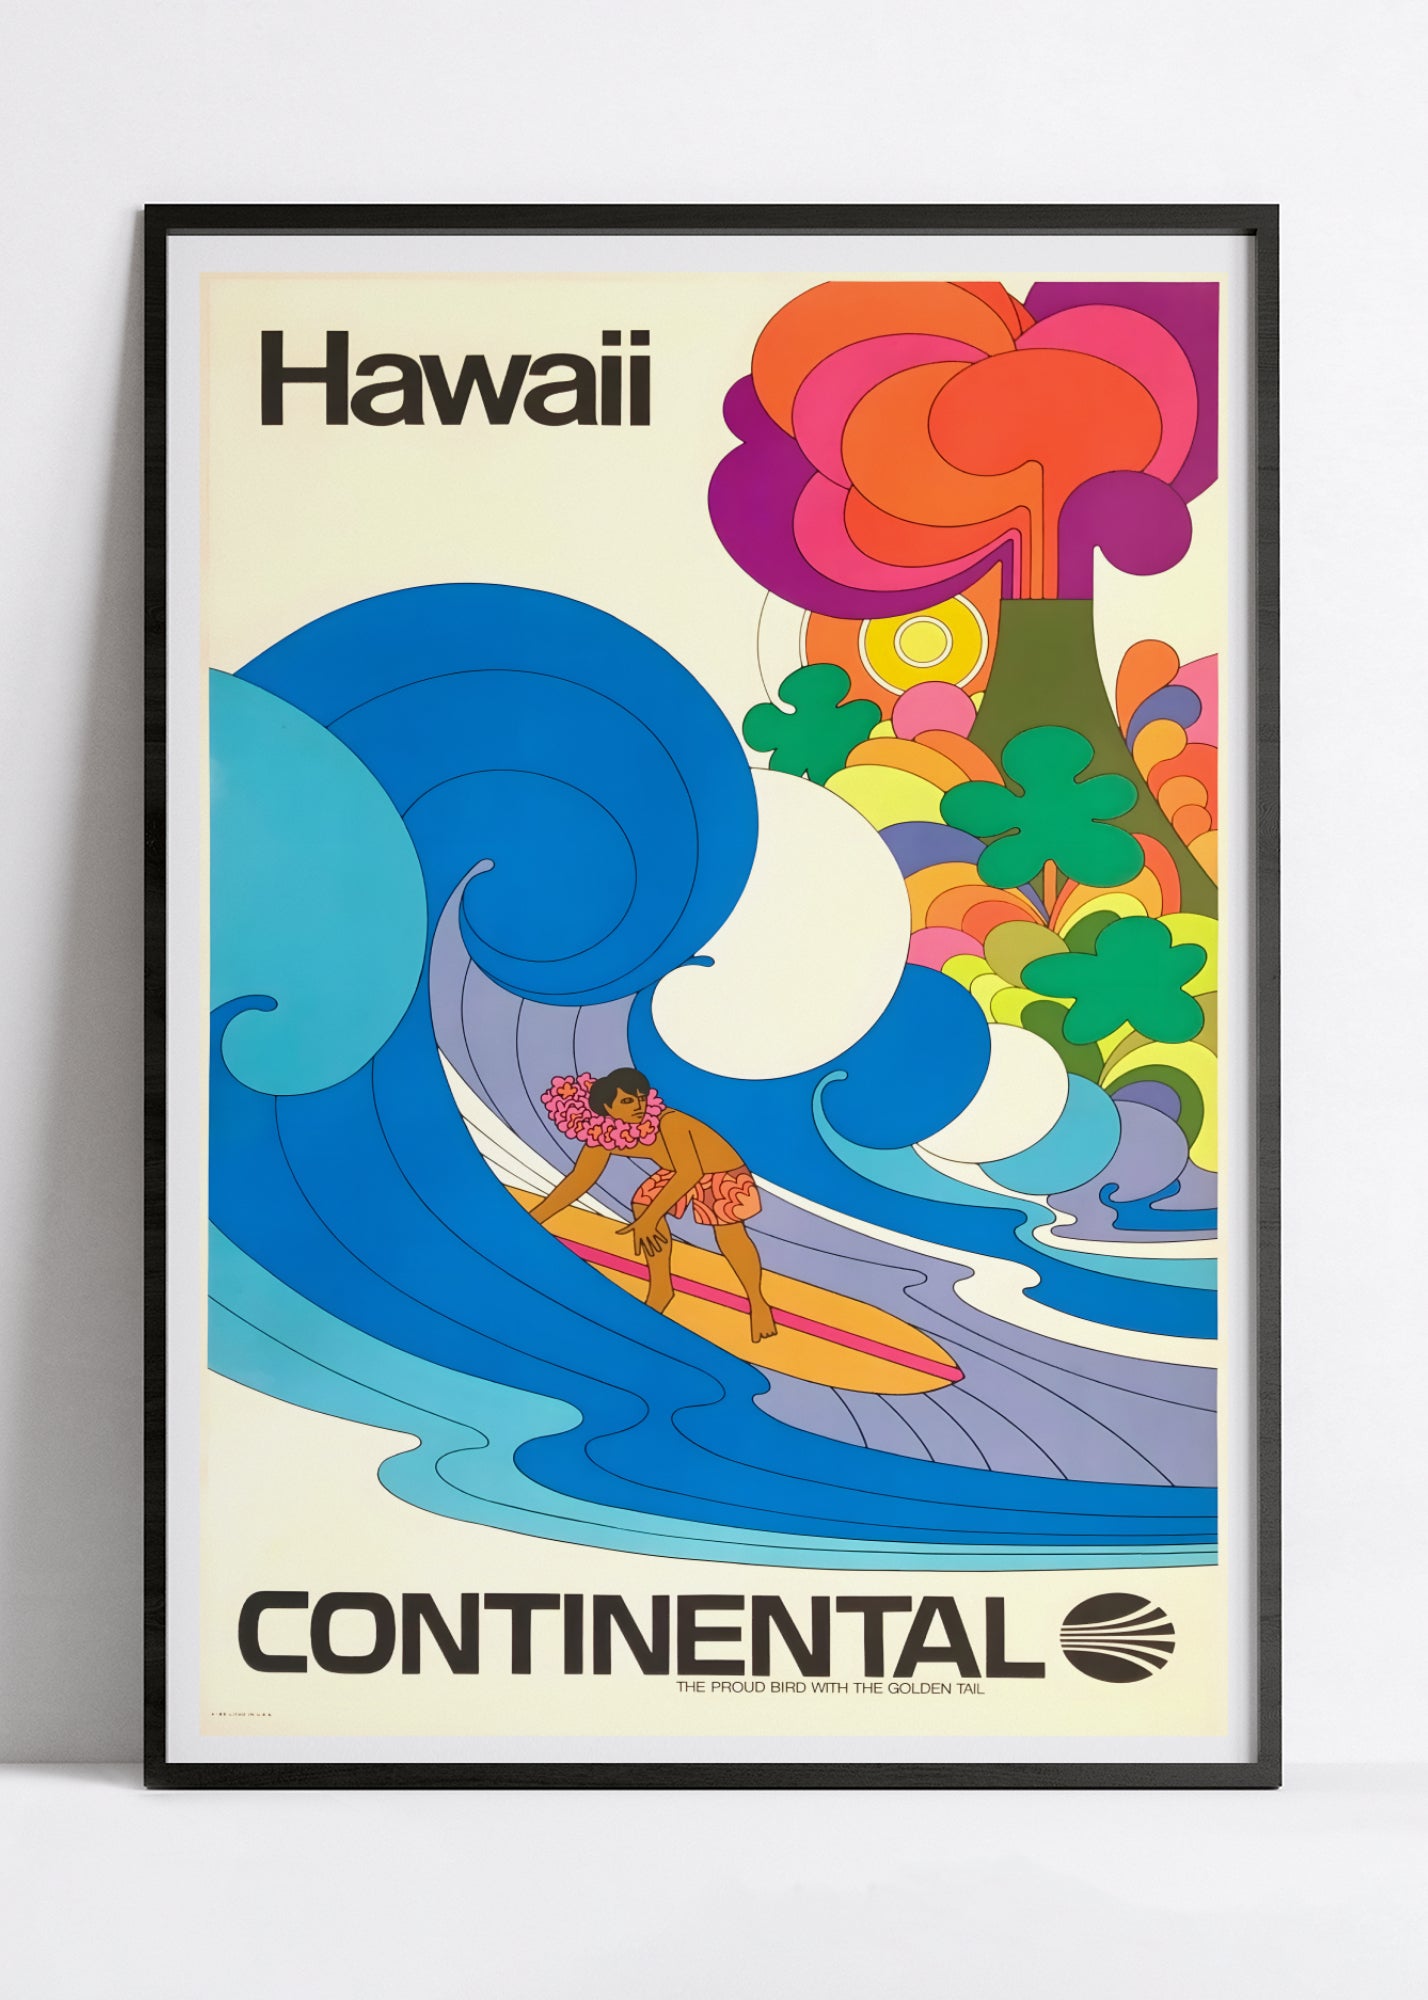 Vintage-Reiseplakat „Hawaii“ – Kontinental – High Definition – mattes Papier 230 g/m²